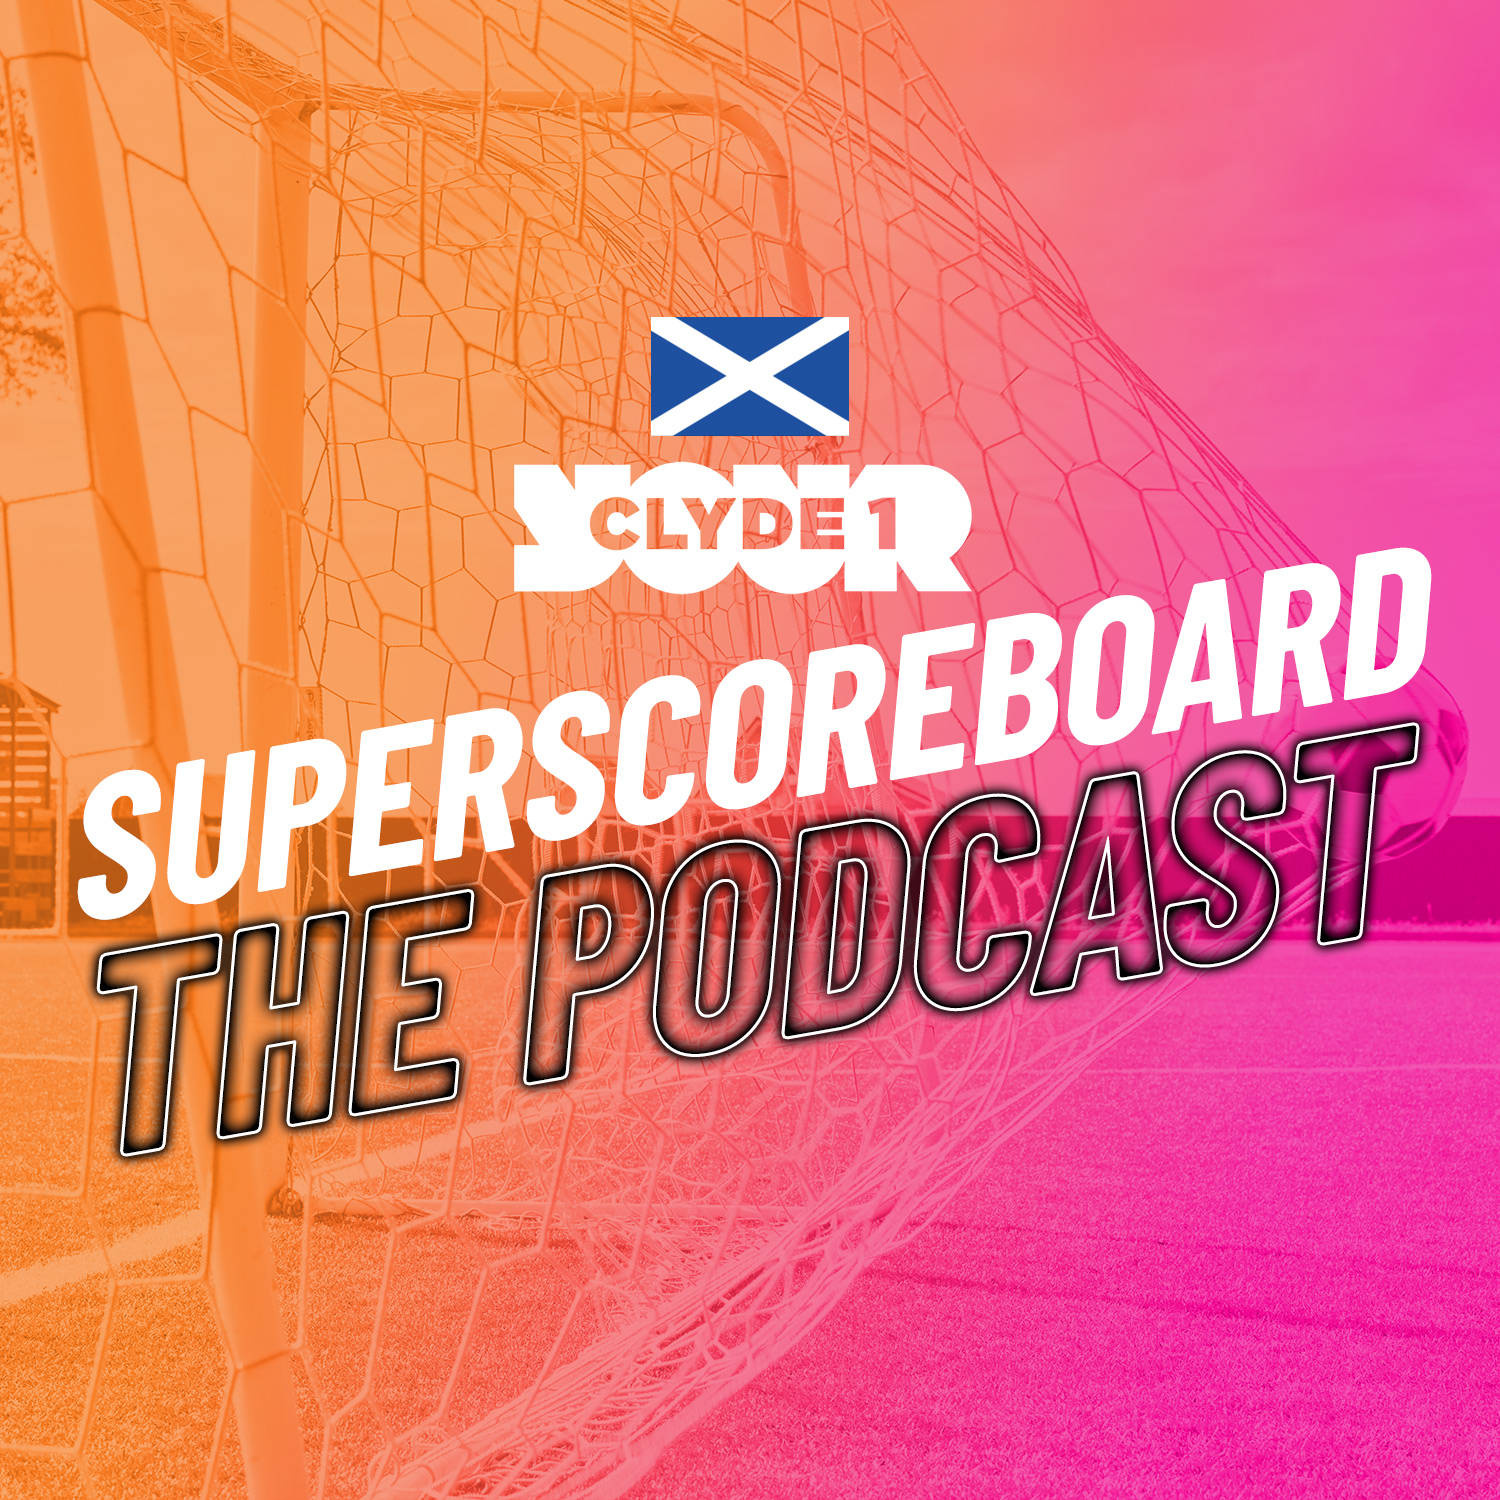 Saturday 25th November Clyde 1 Superscoreboard Part 1